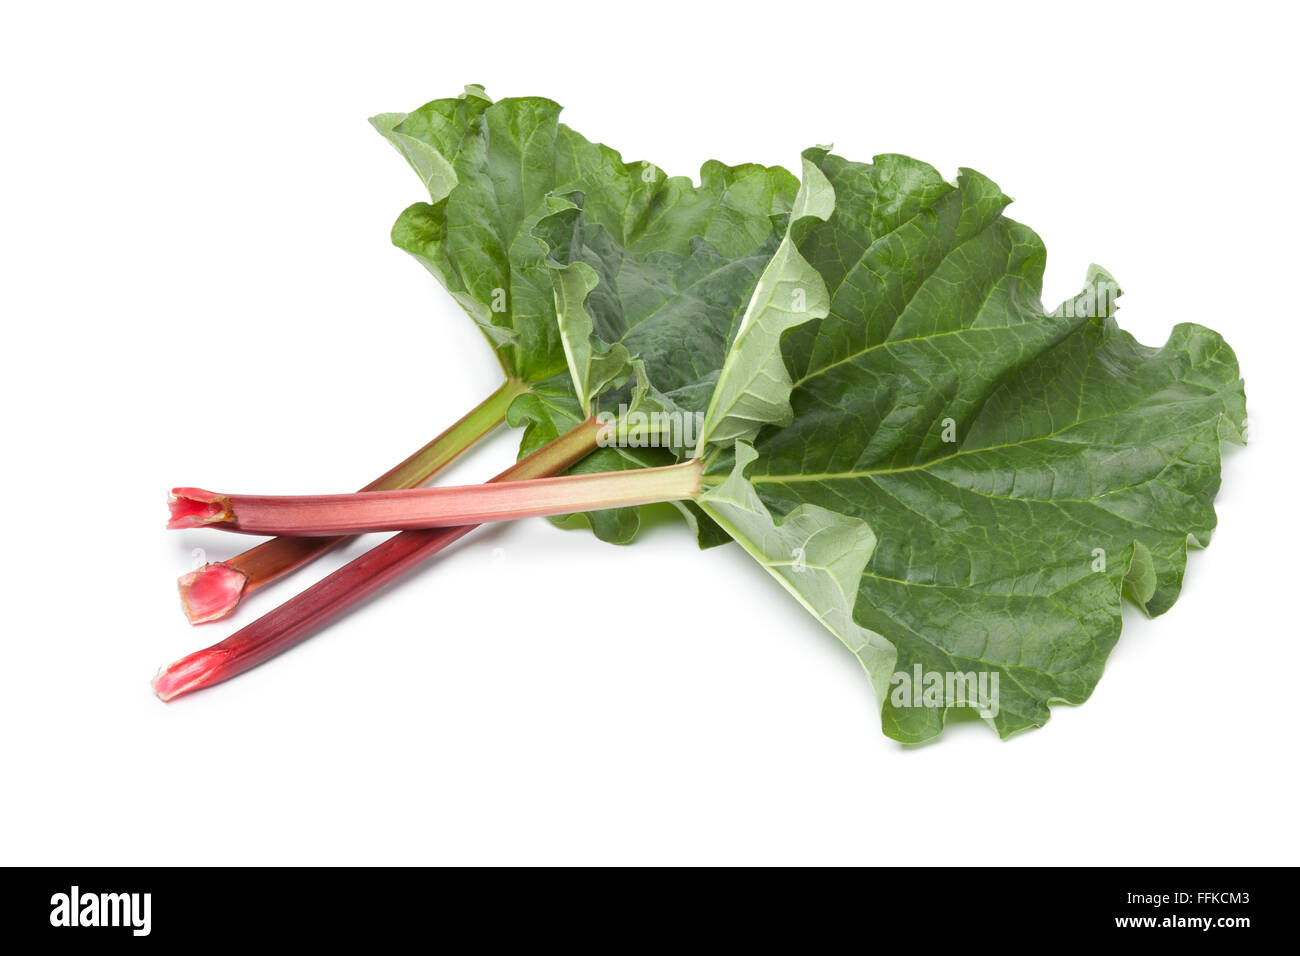 Fresh Rhubarb stalks and leaves on white background Stock Photo